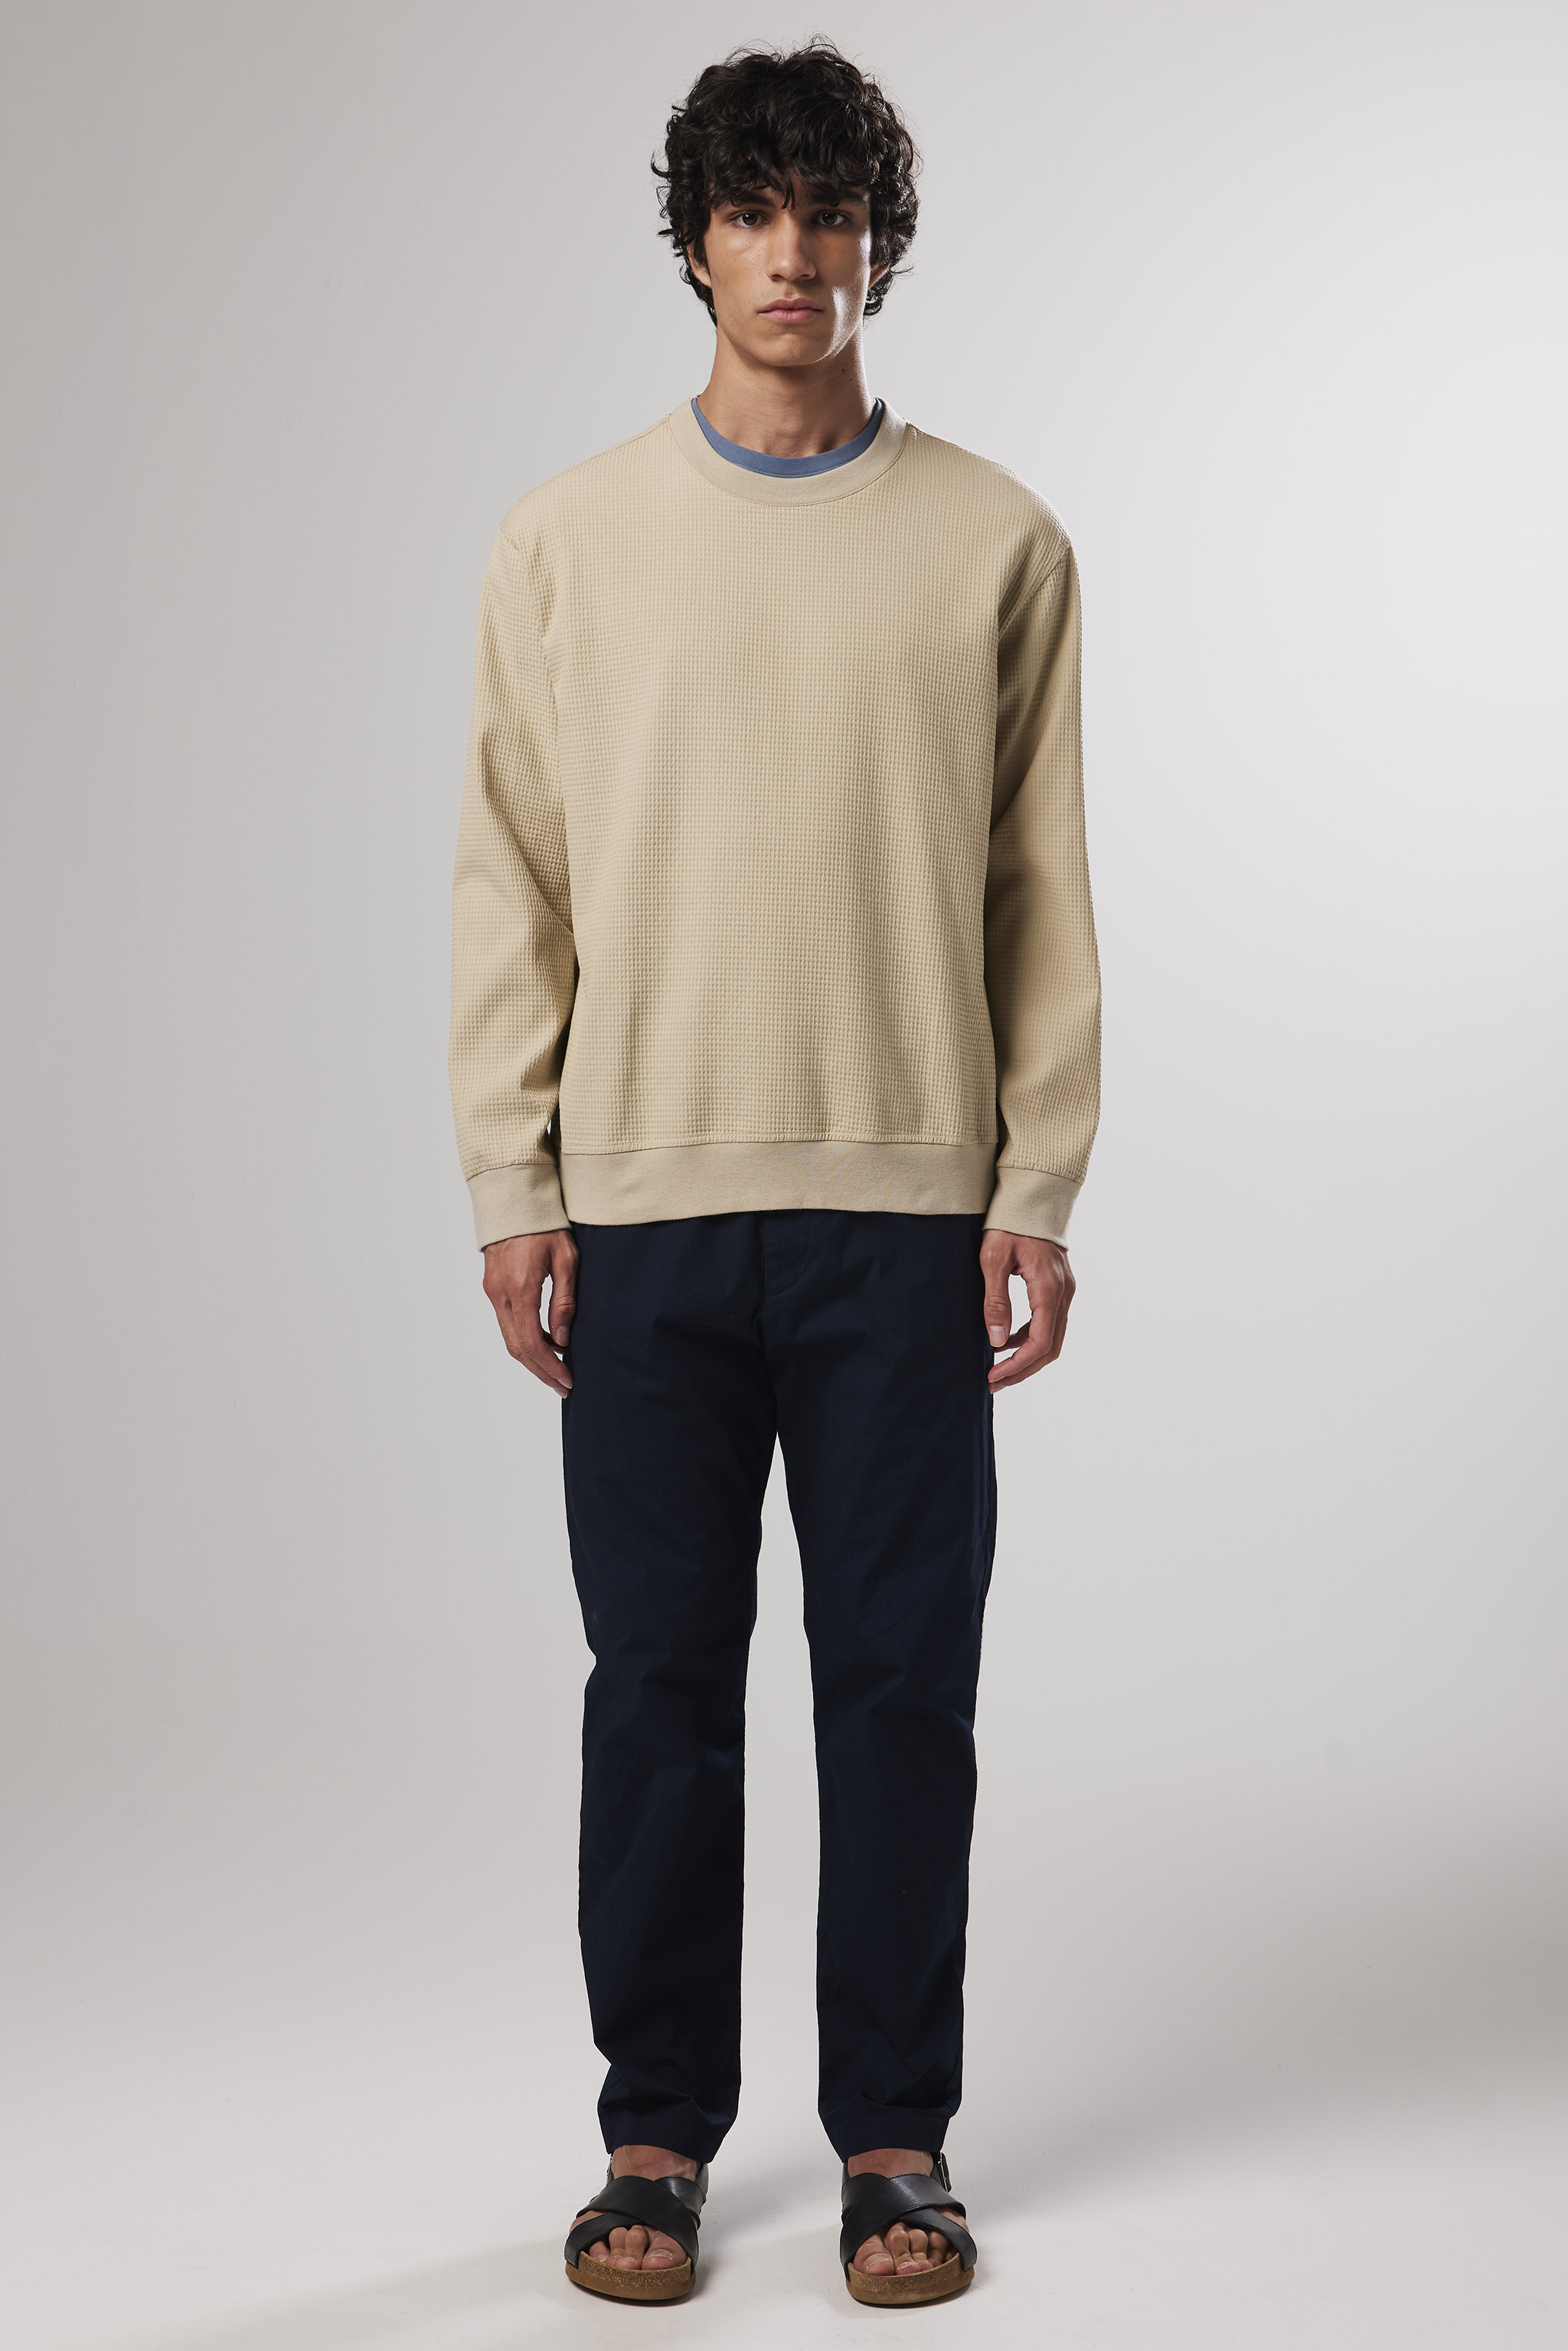 Crew Neck 3477 men's sweatshirt - White - Buy online at NN.07®